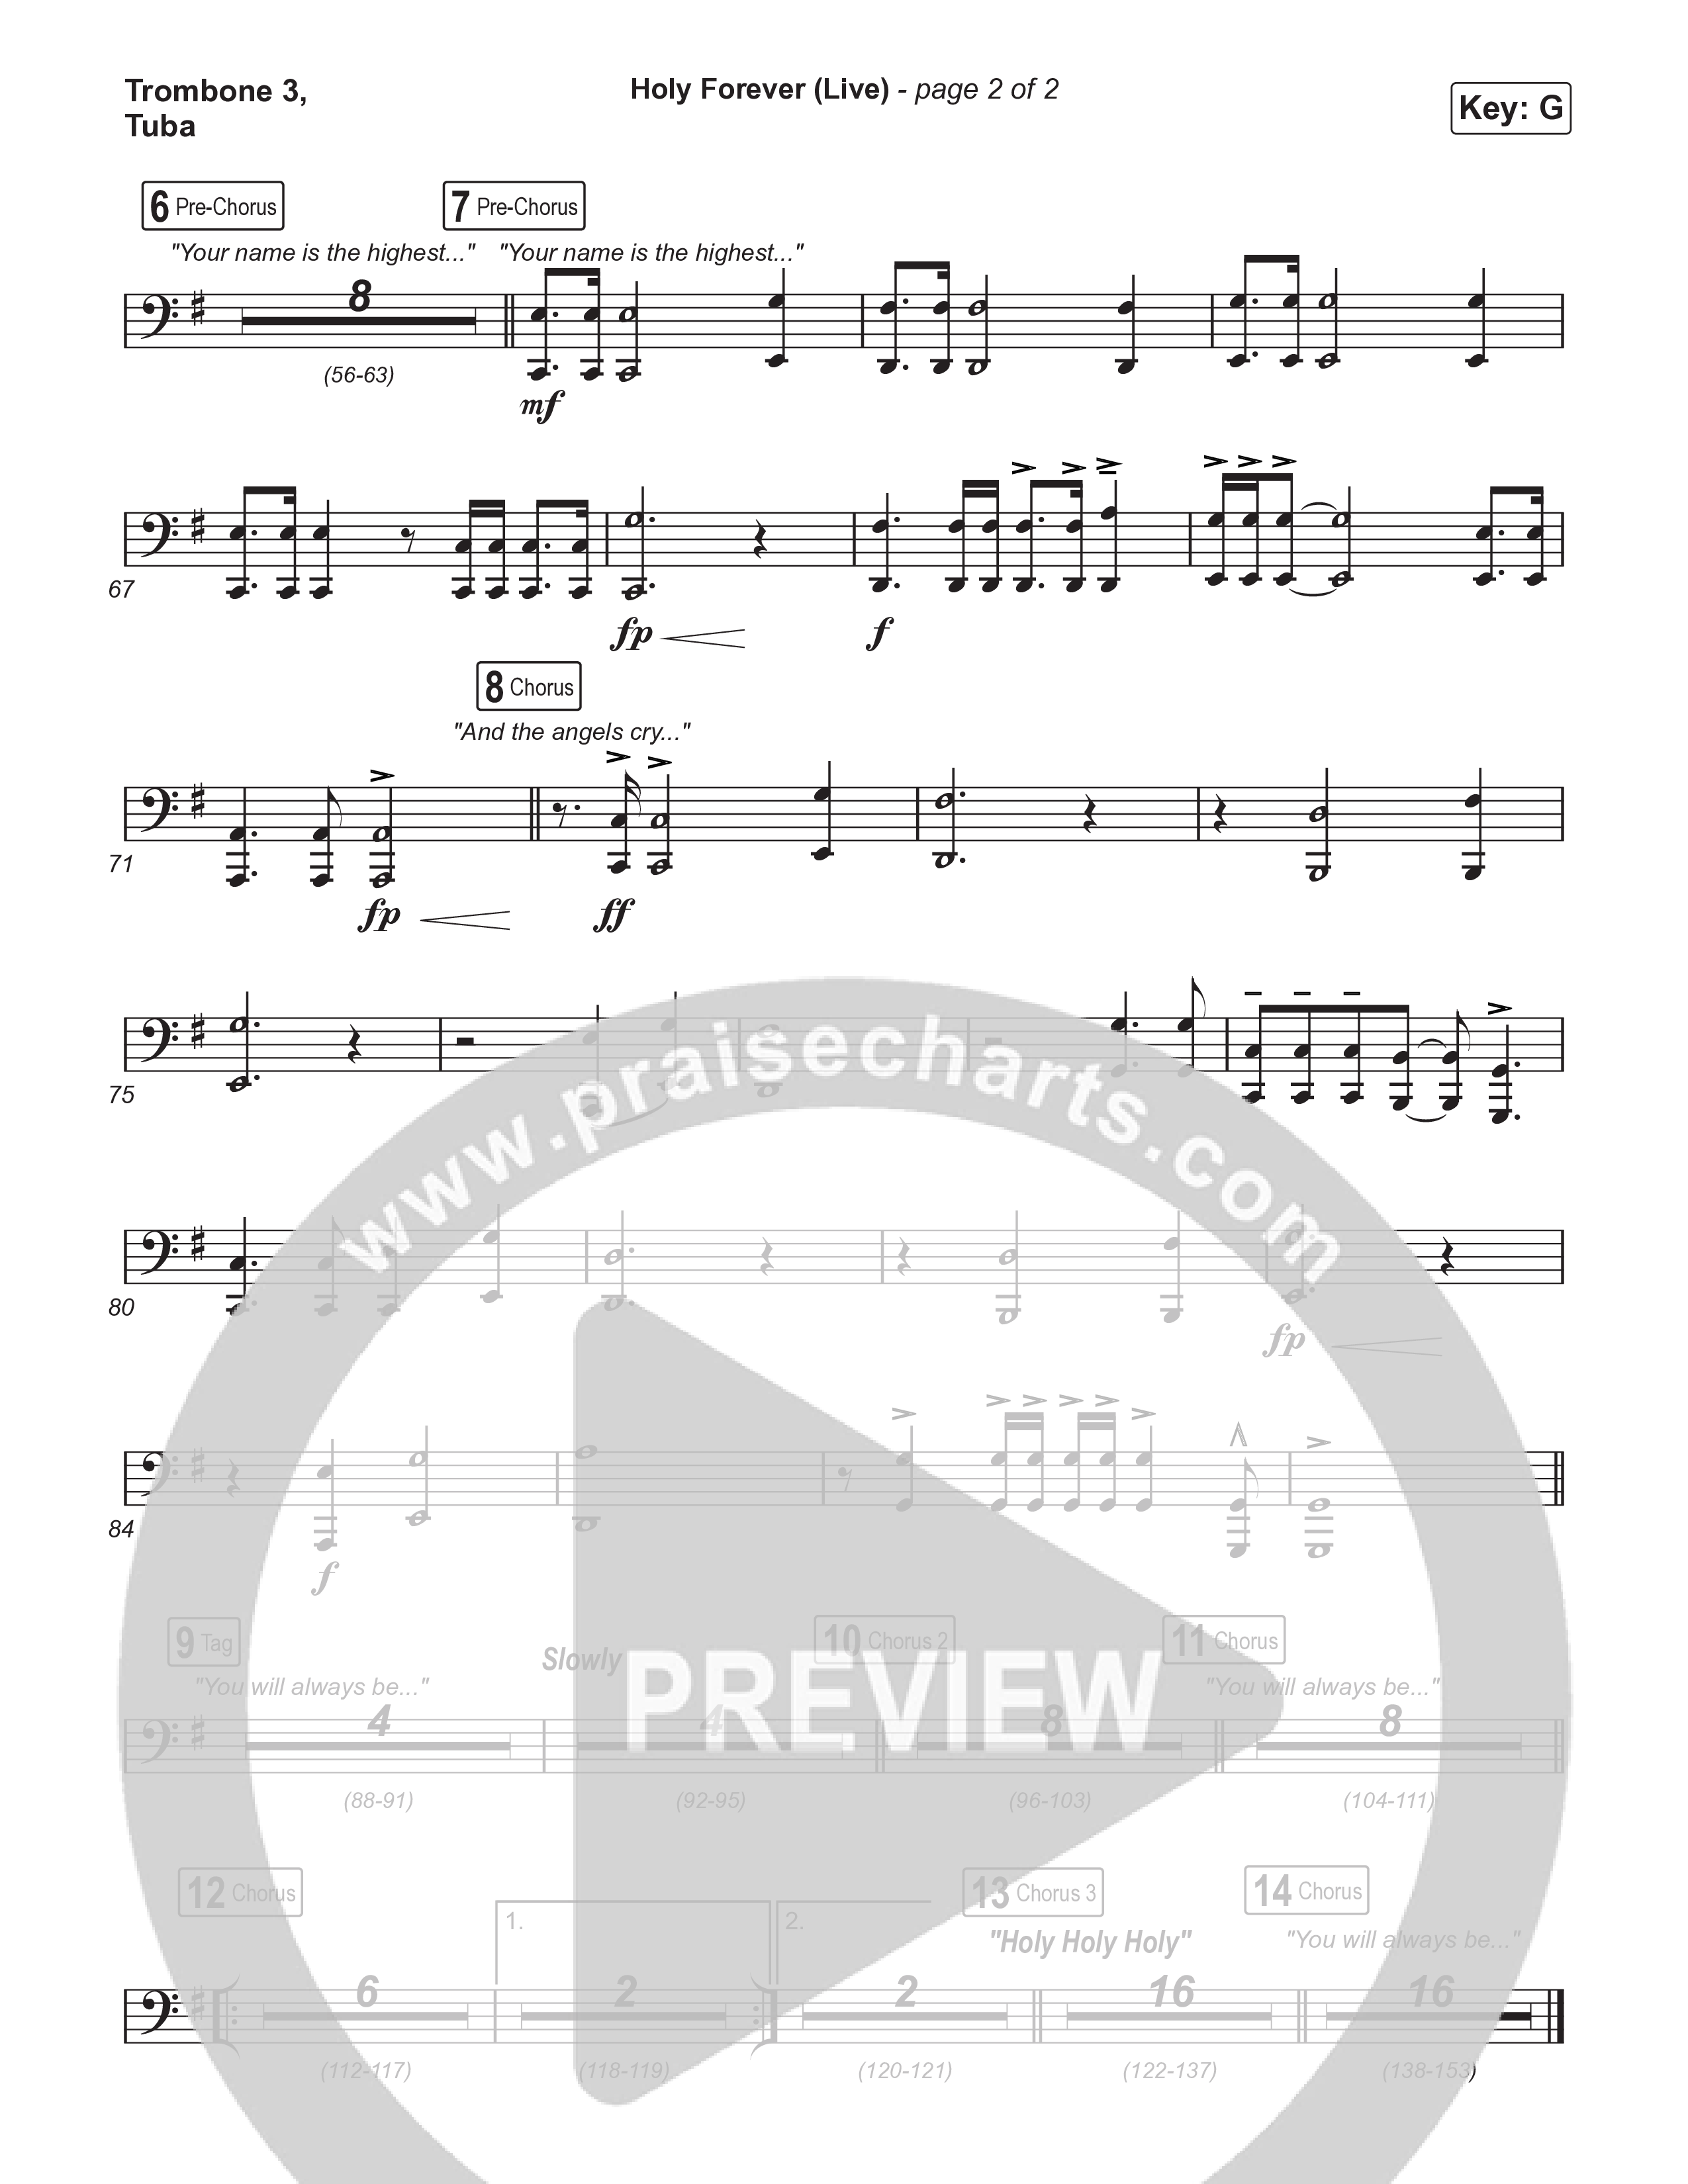 Holy Forever (Sing It Now) Trombone 3/Tuba (CeCe Winans / Arr. Luke Gambill)